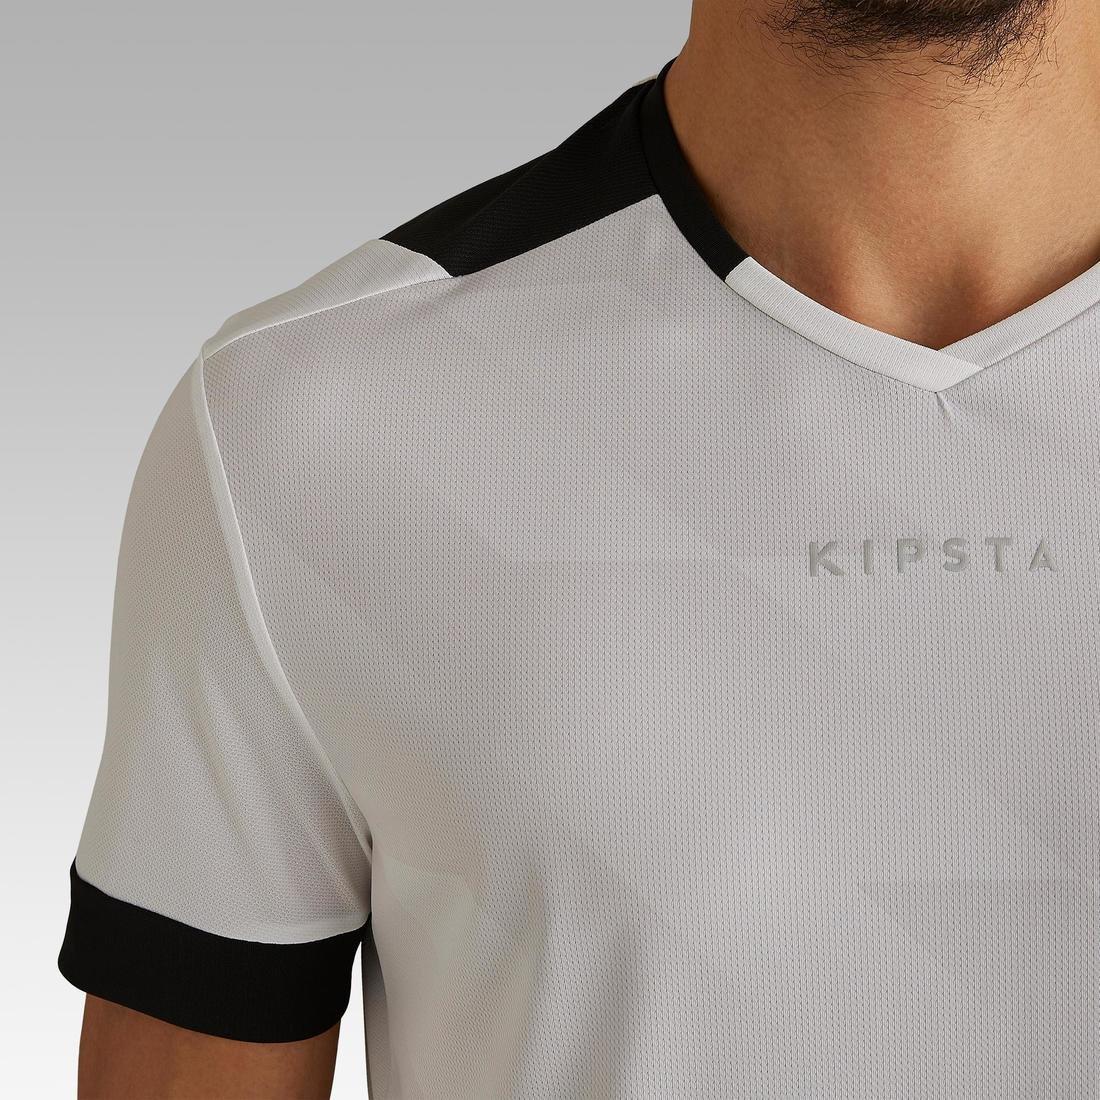 KIPSTA - F500 Adult Football Jersey, Bright Indigo